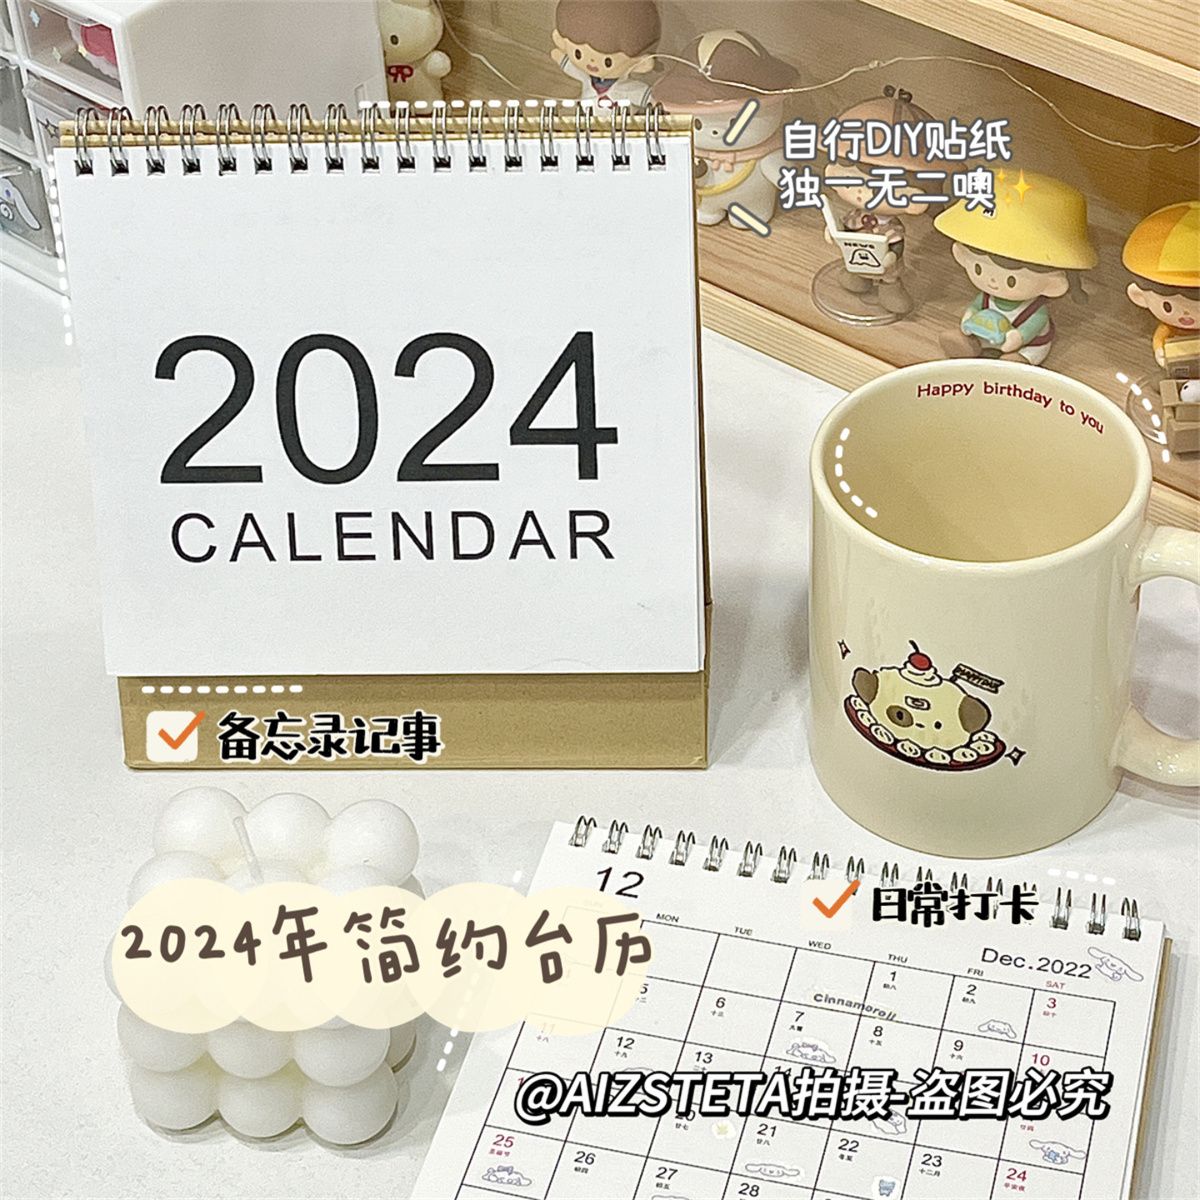 2024 calendar ins style desk calendar lunar calendar creative notes notebook simple calendar fresh desktop decoration